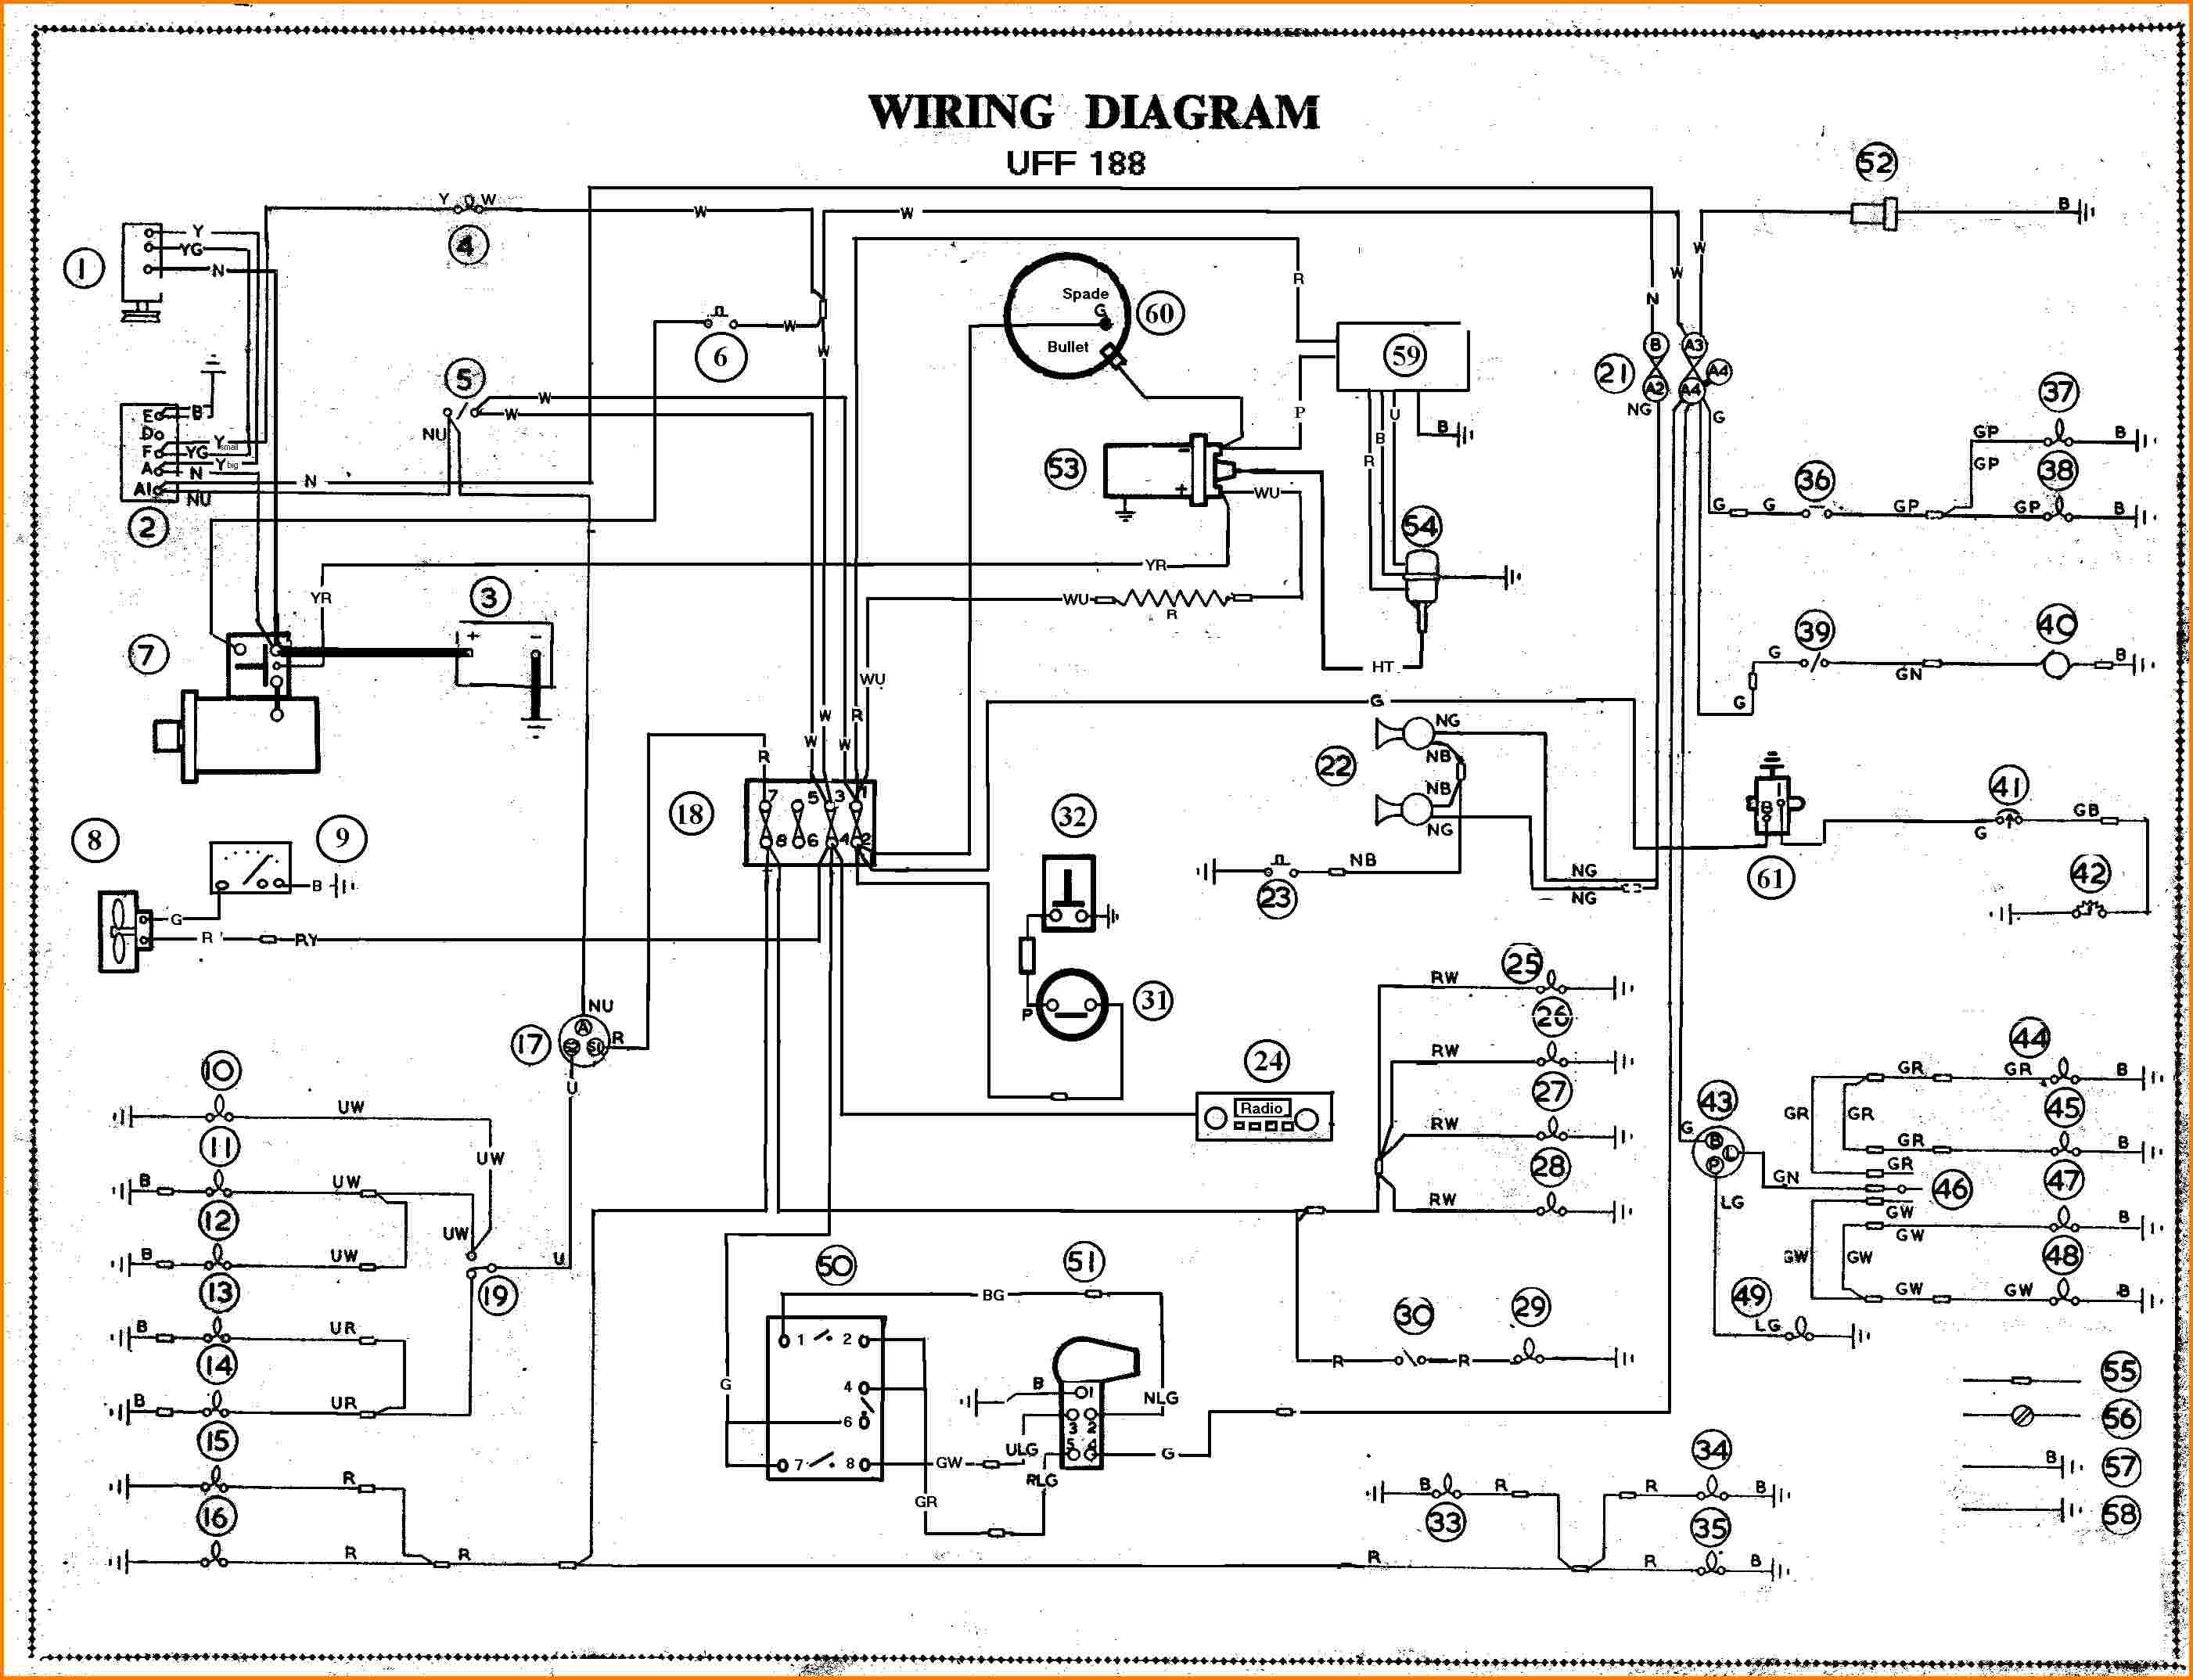 Mitchell Automotive Wiring Diagrams Automotive Wiring Diagrams software within Diagram In Automobile Of Mitchell Automotive Wiring Diagrams